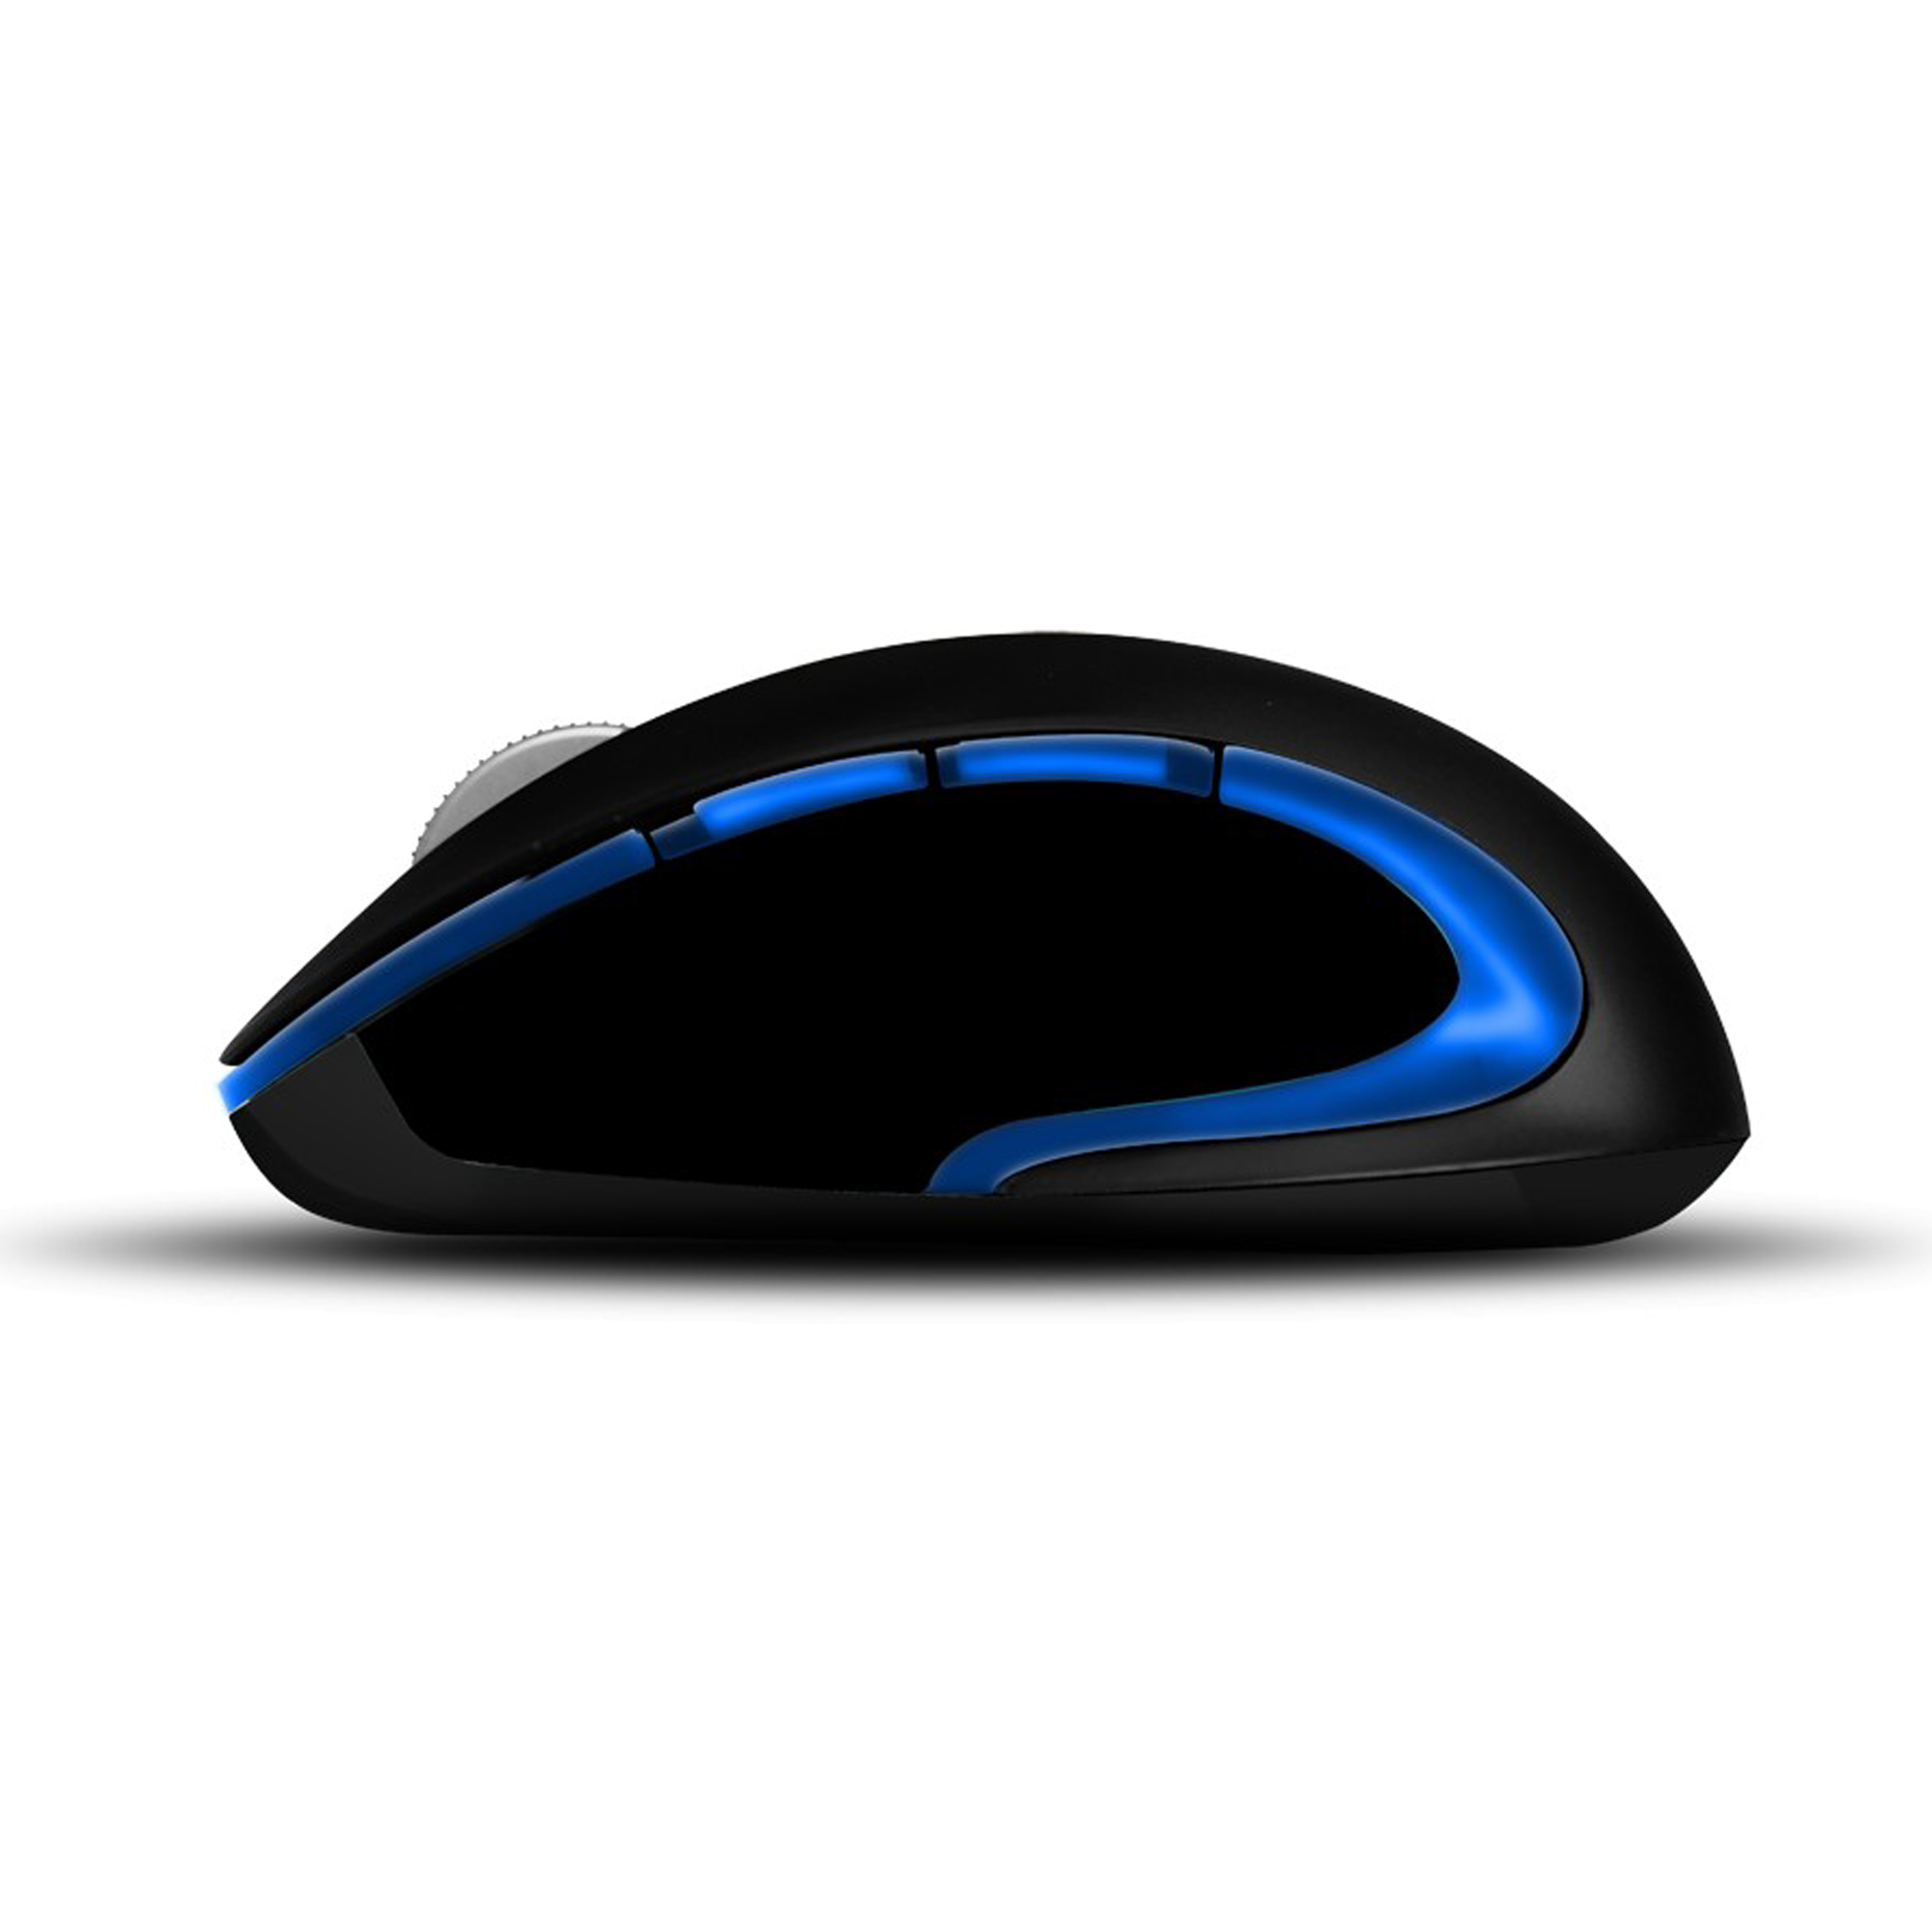 Maxell Nano Wireless Mouse MOWL-777 Blue